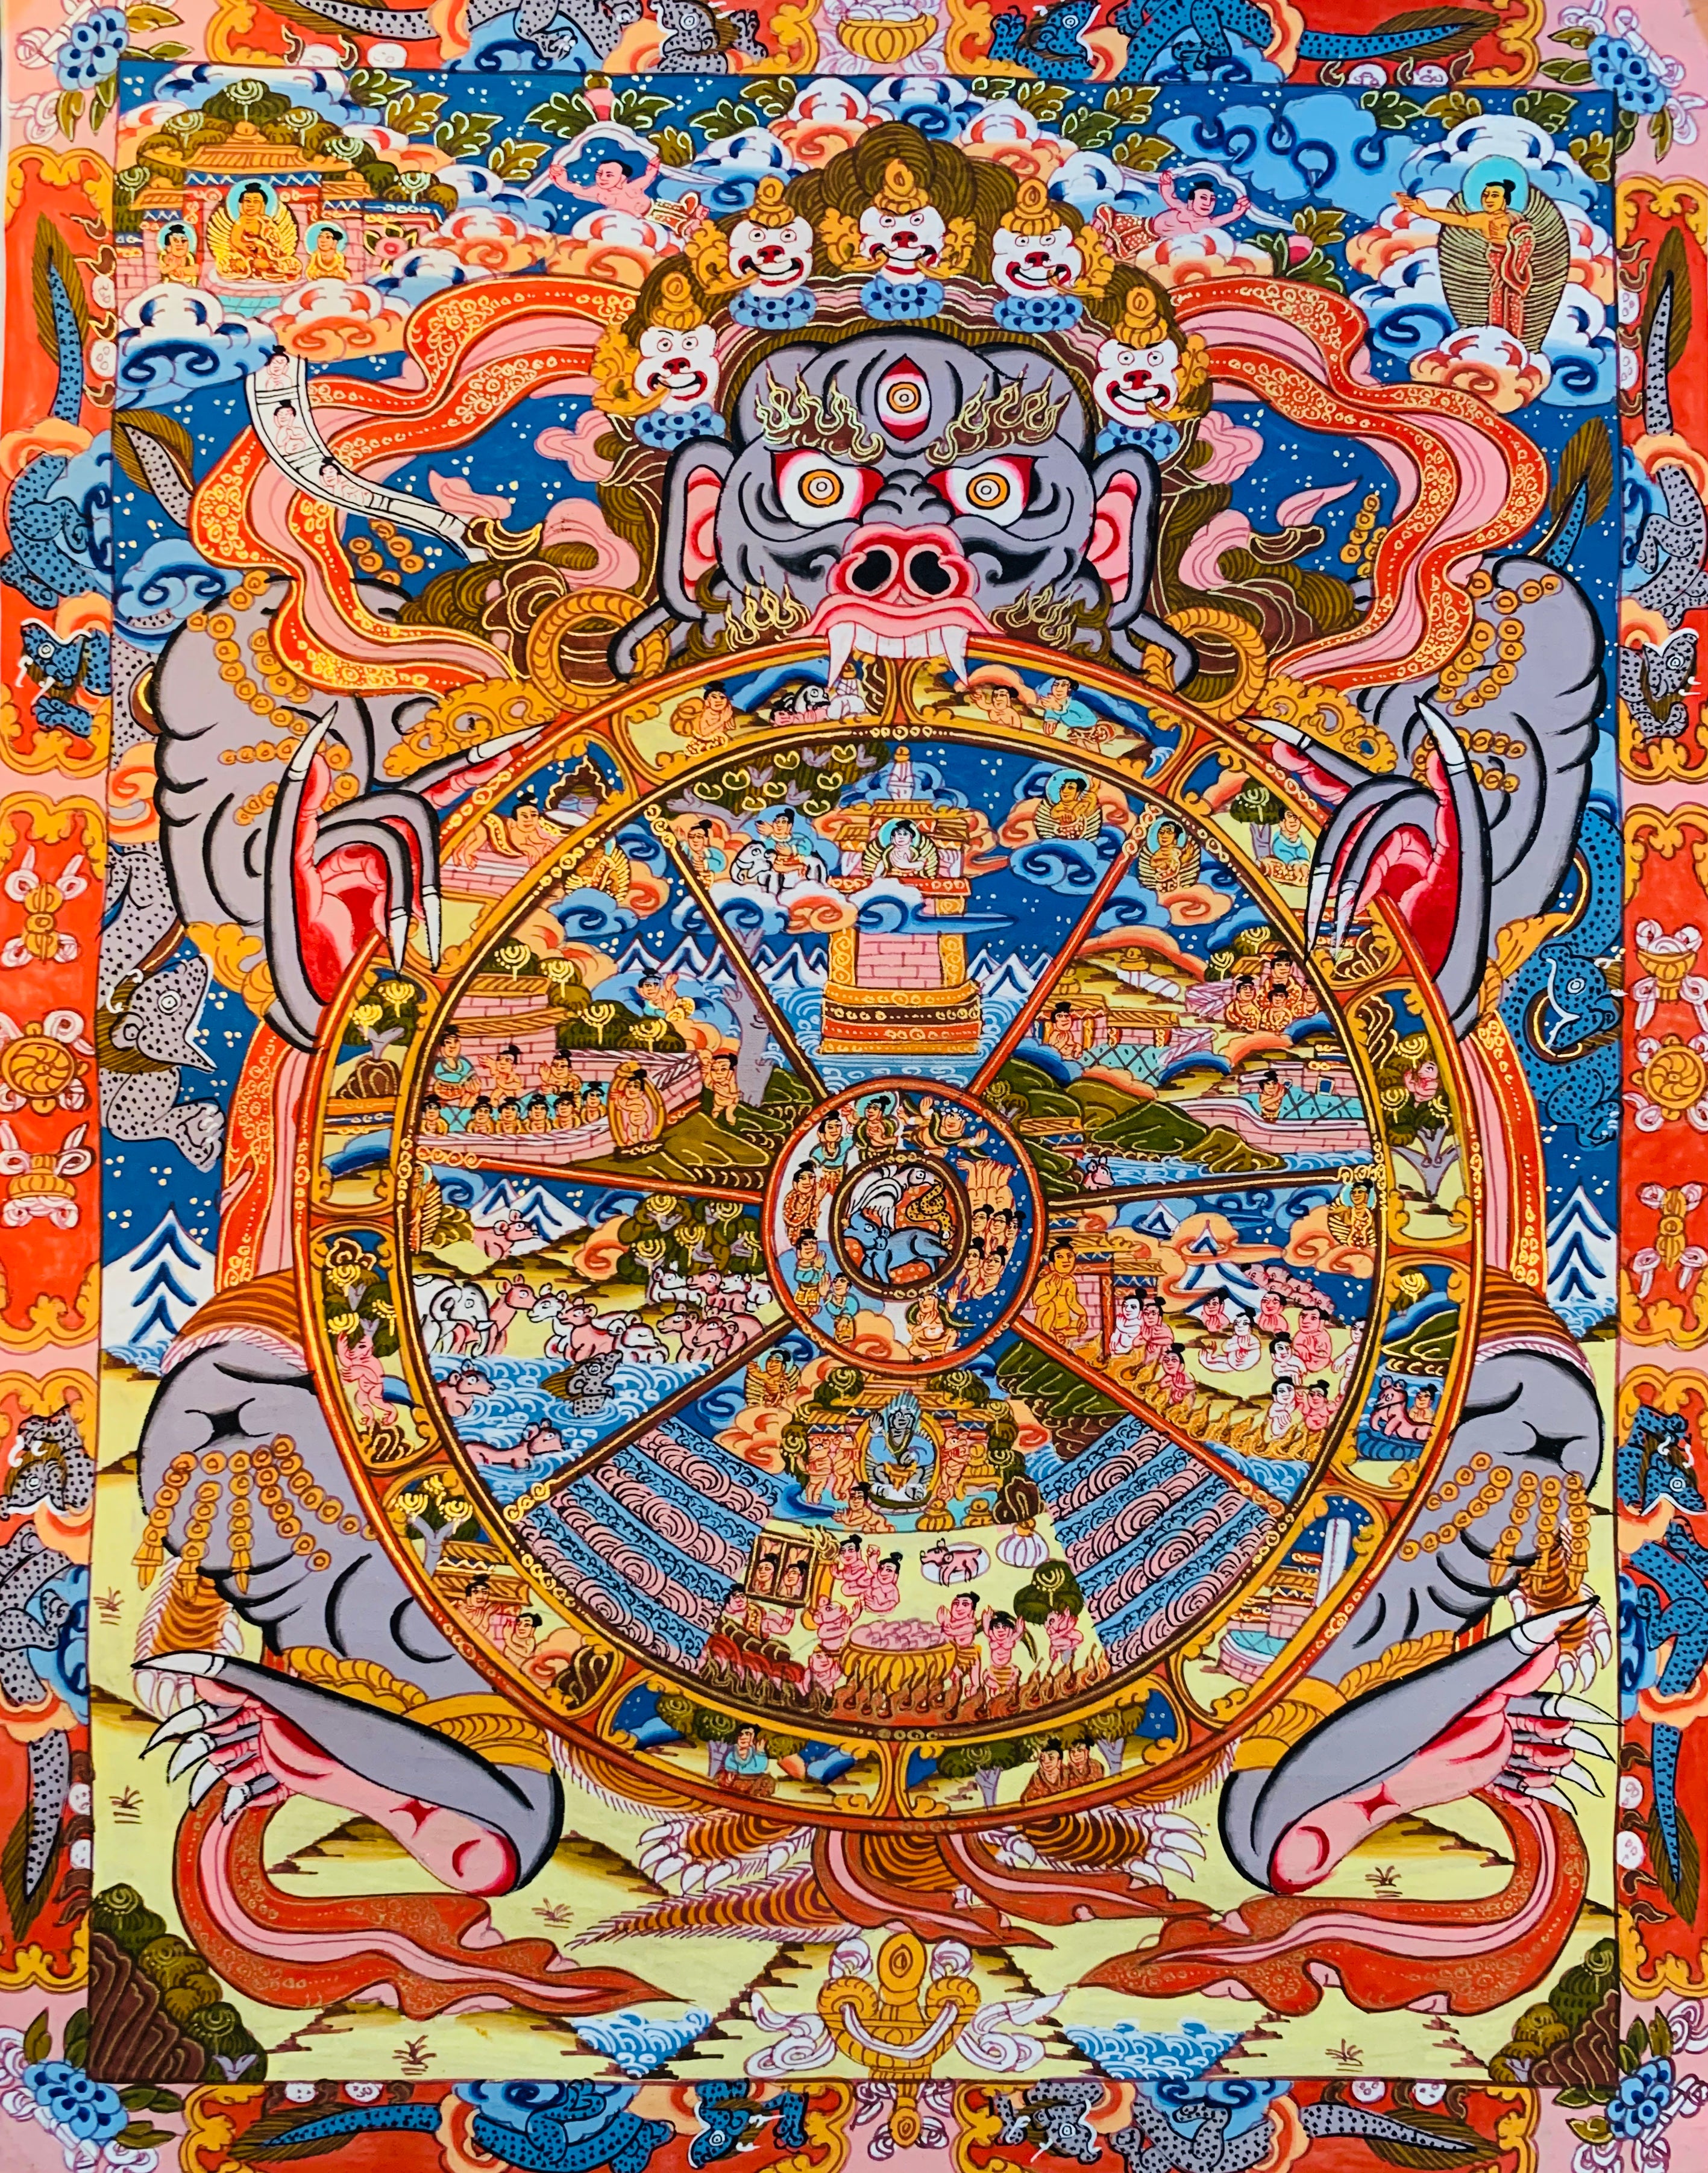 The Wheel of Life Thangka Painting 48*36 - The Thangka